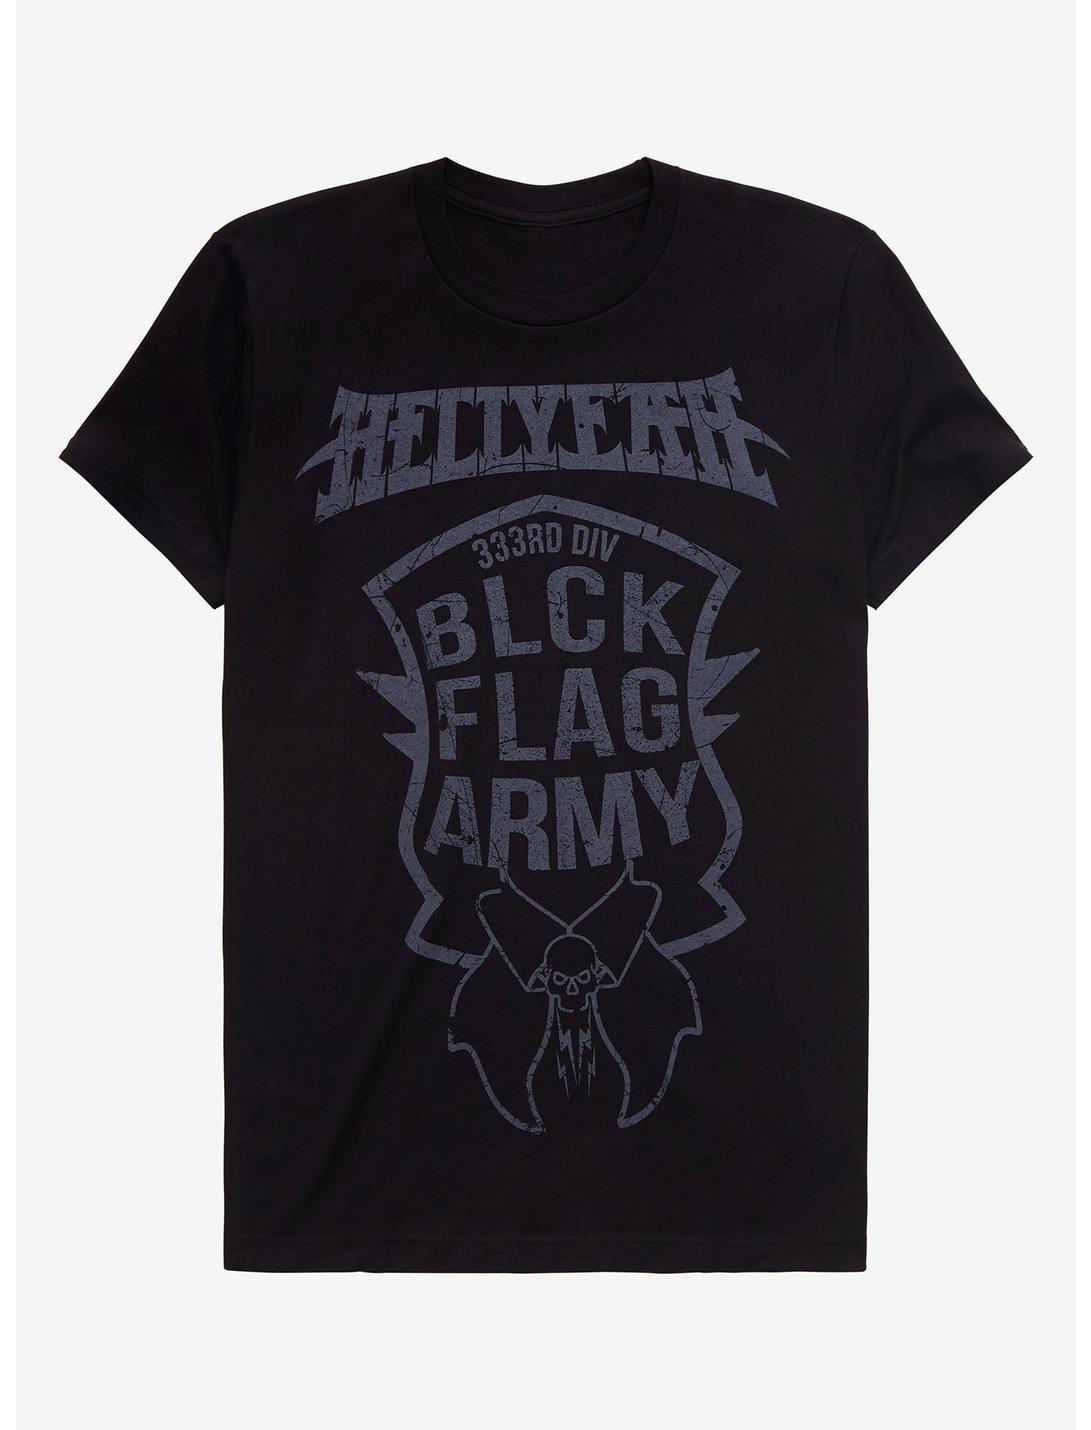 HELLYEAH Black Flag Army T-Shirt, BLACK, hi-res